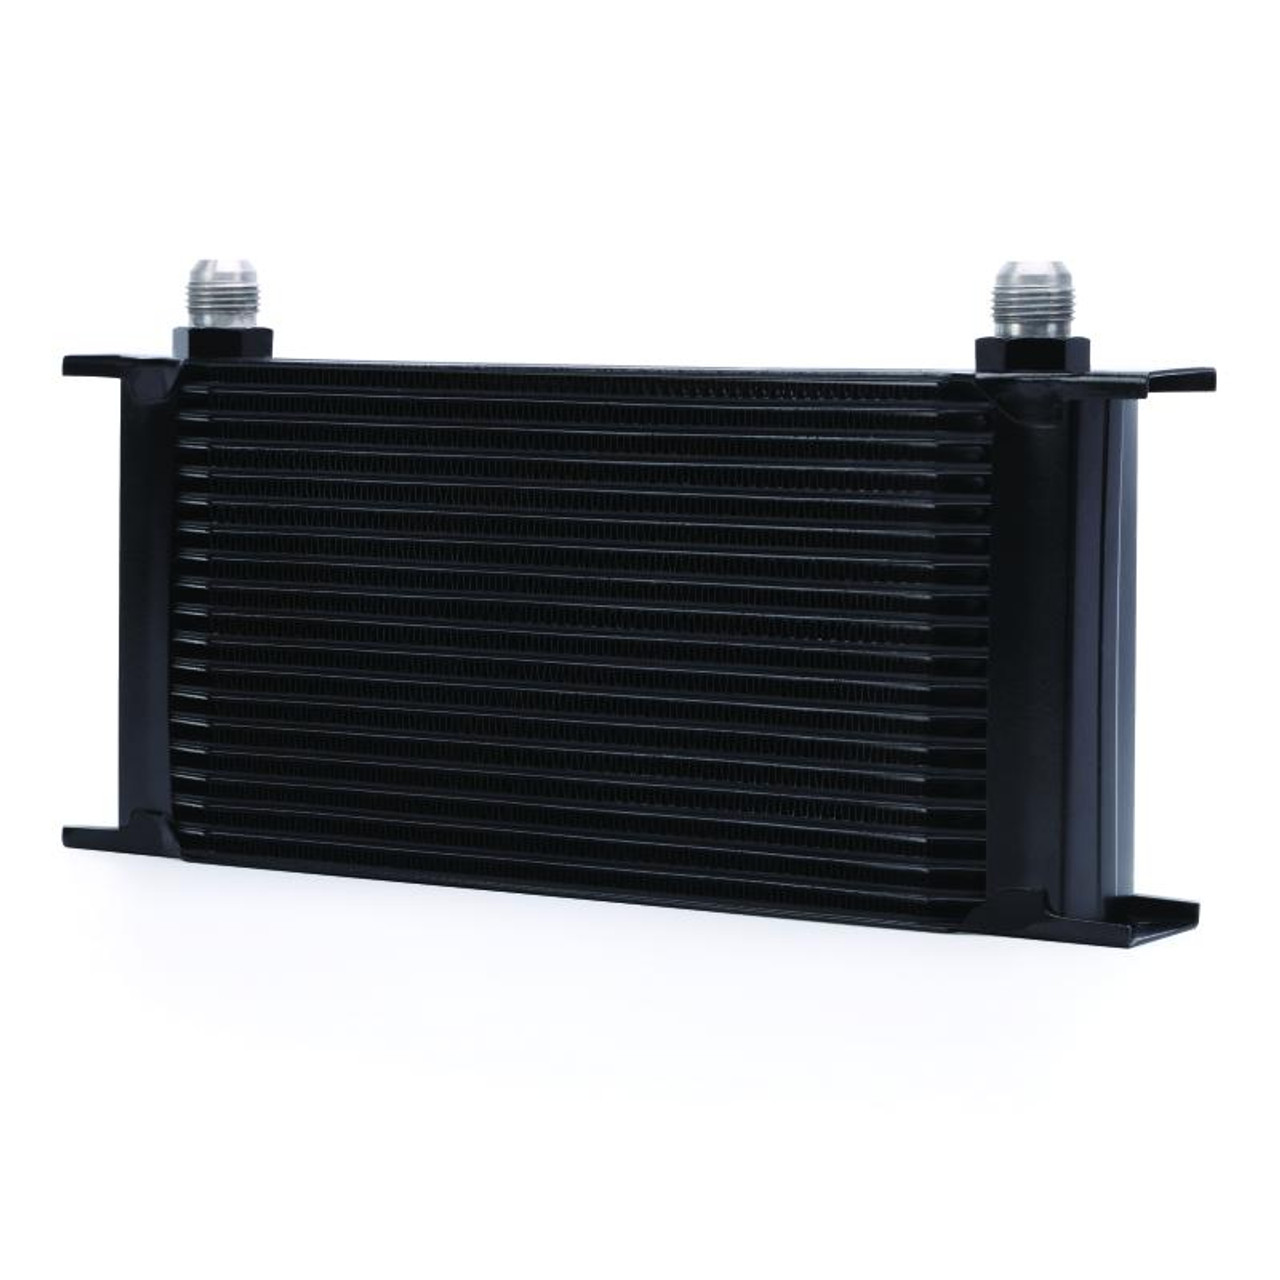 Mishimoto Universal 19 Row Oil Cooler - Black - MMOC-19BK